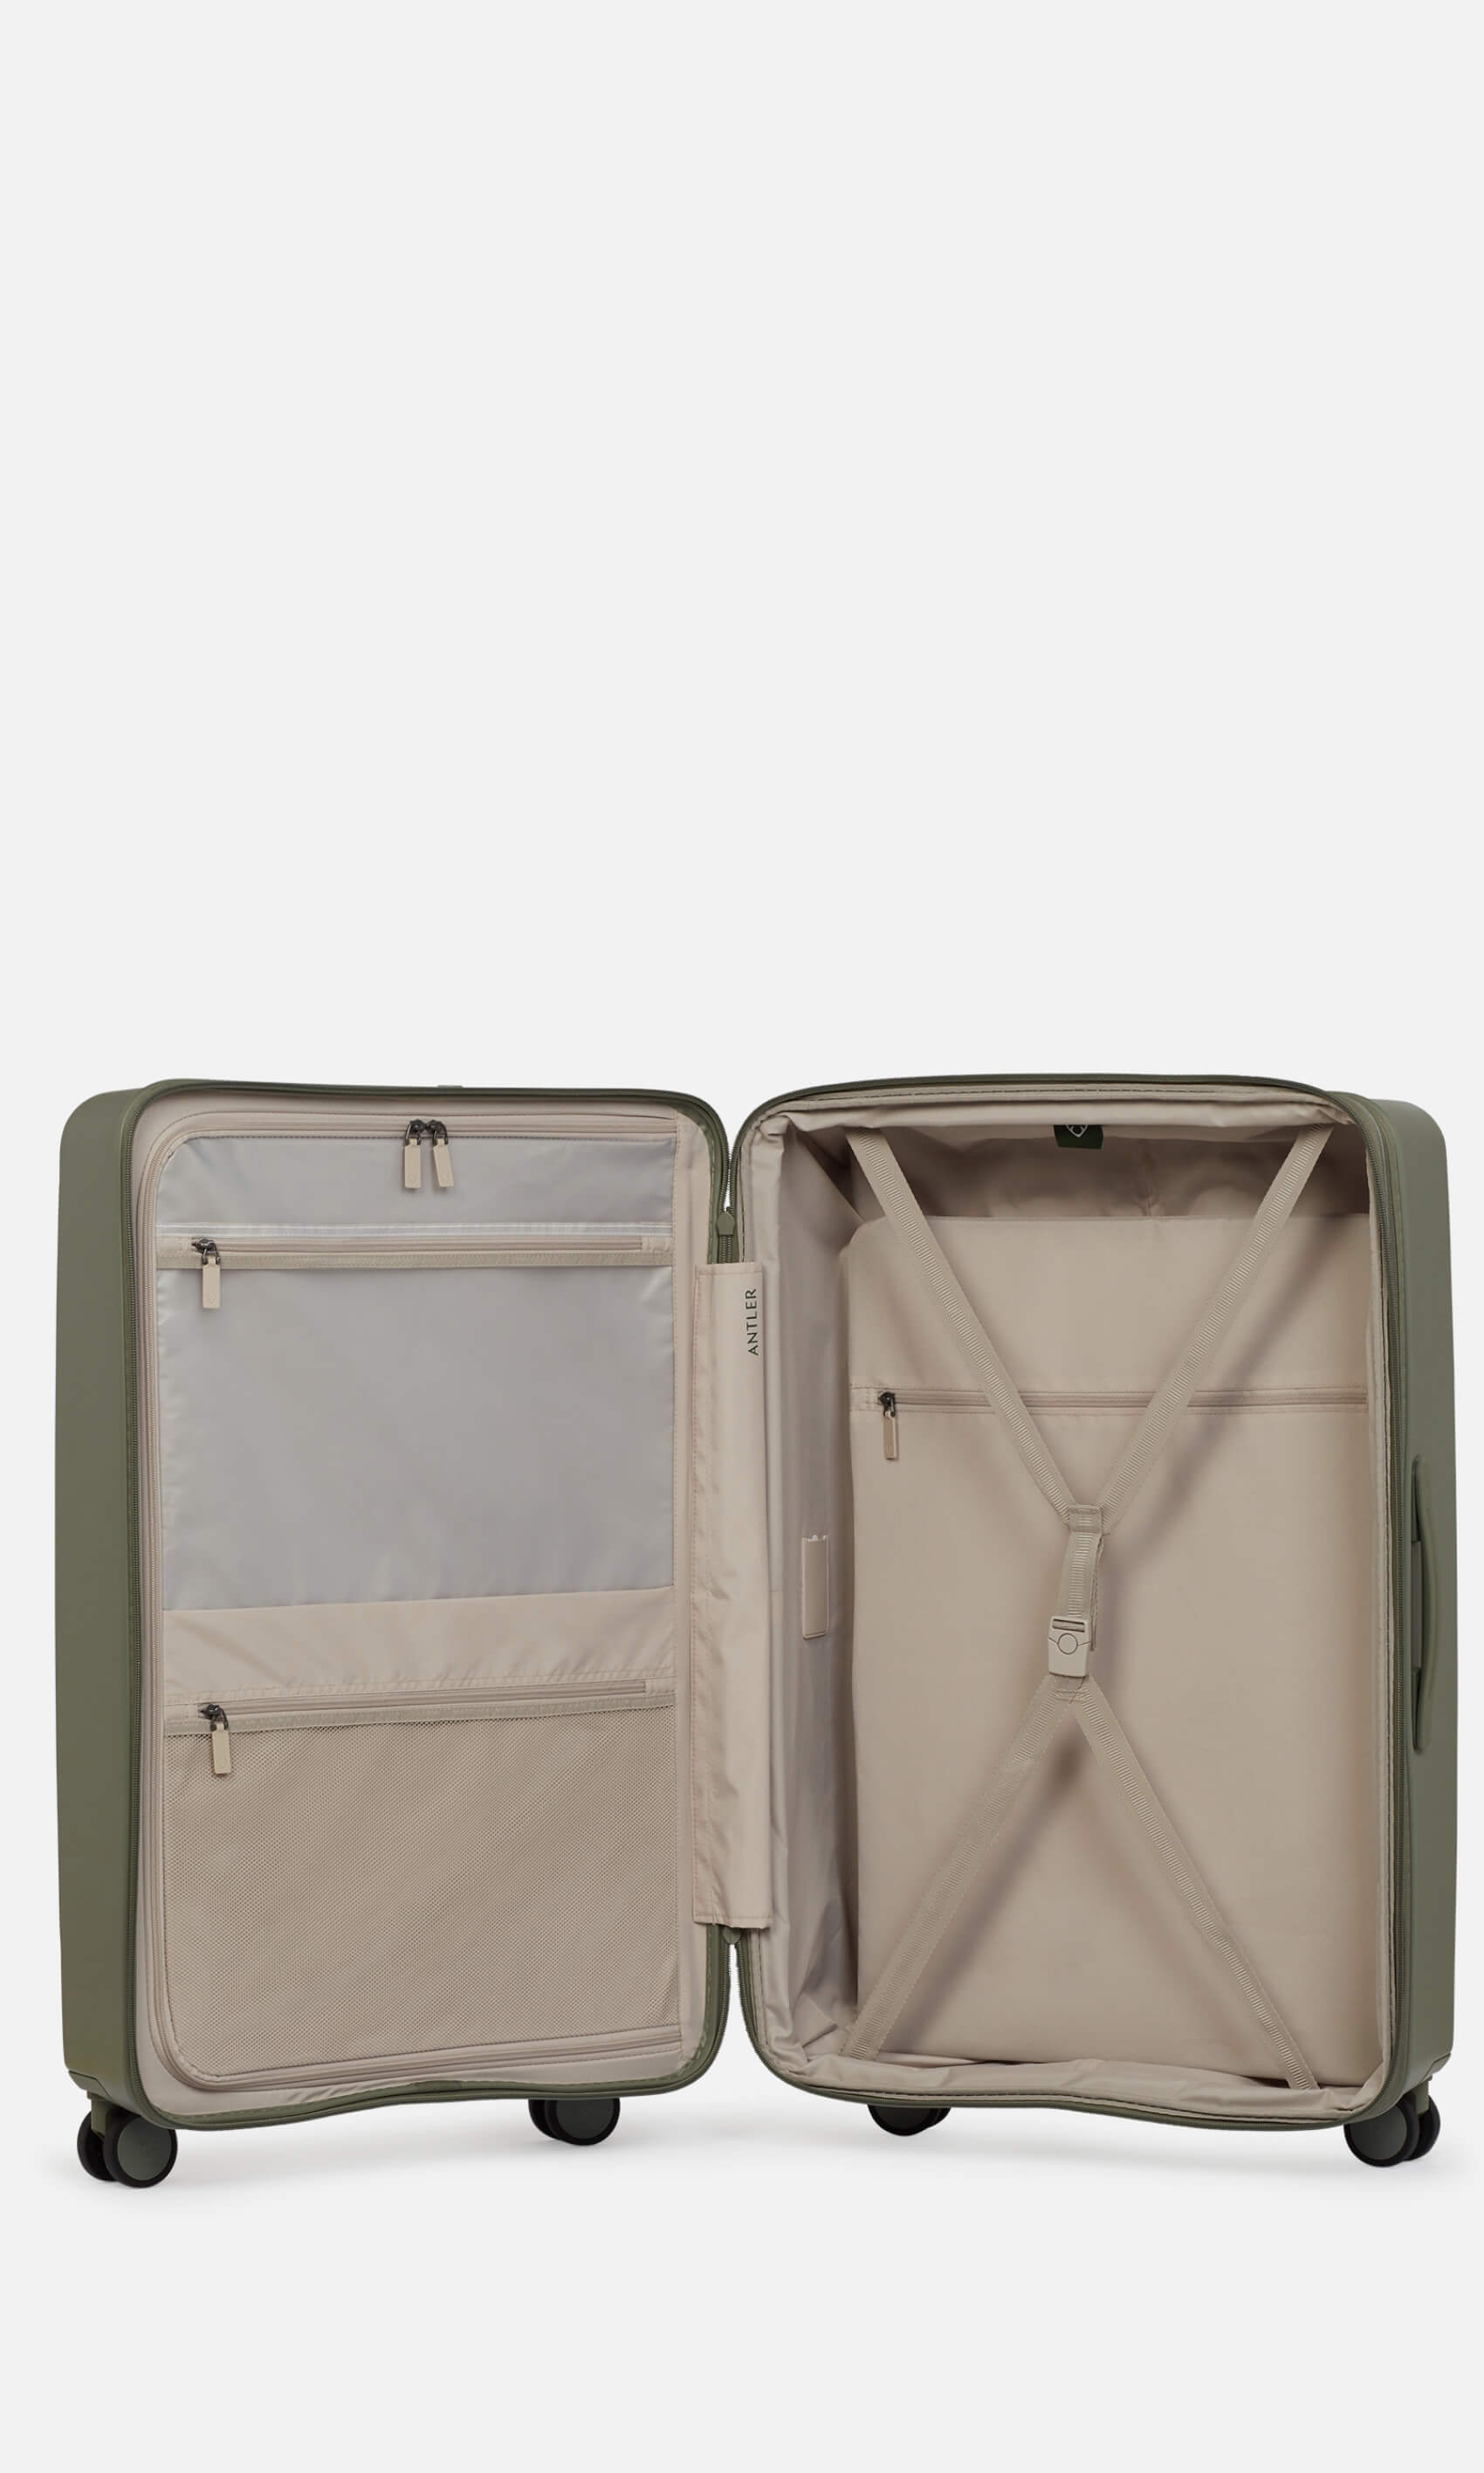 Antler Luggage -  Stamford large in field green - Hard Suitcases Stamford Large Suitcase Green | Hard Luggage | Antler 